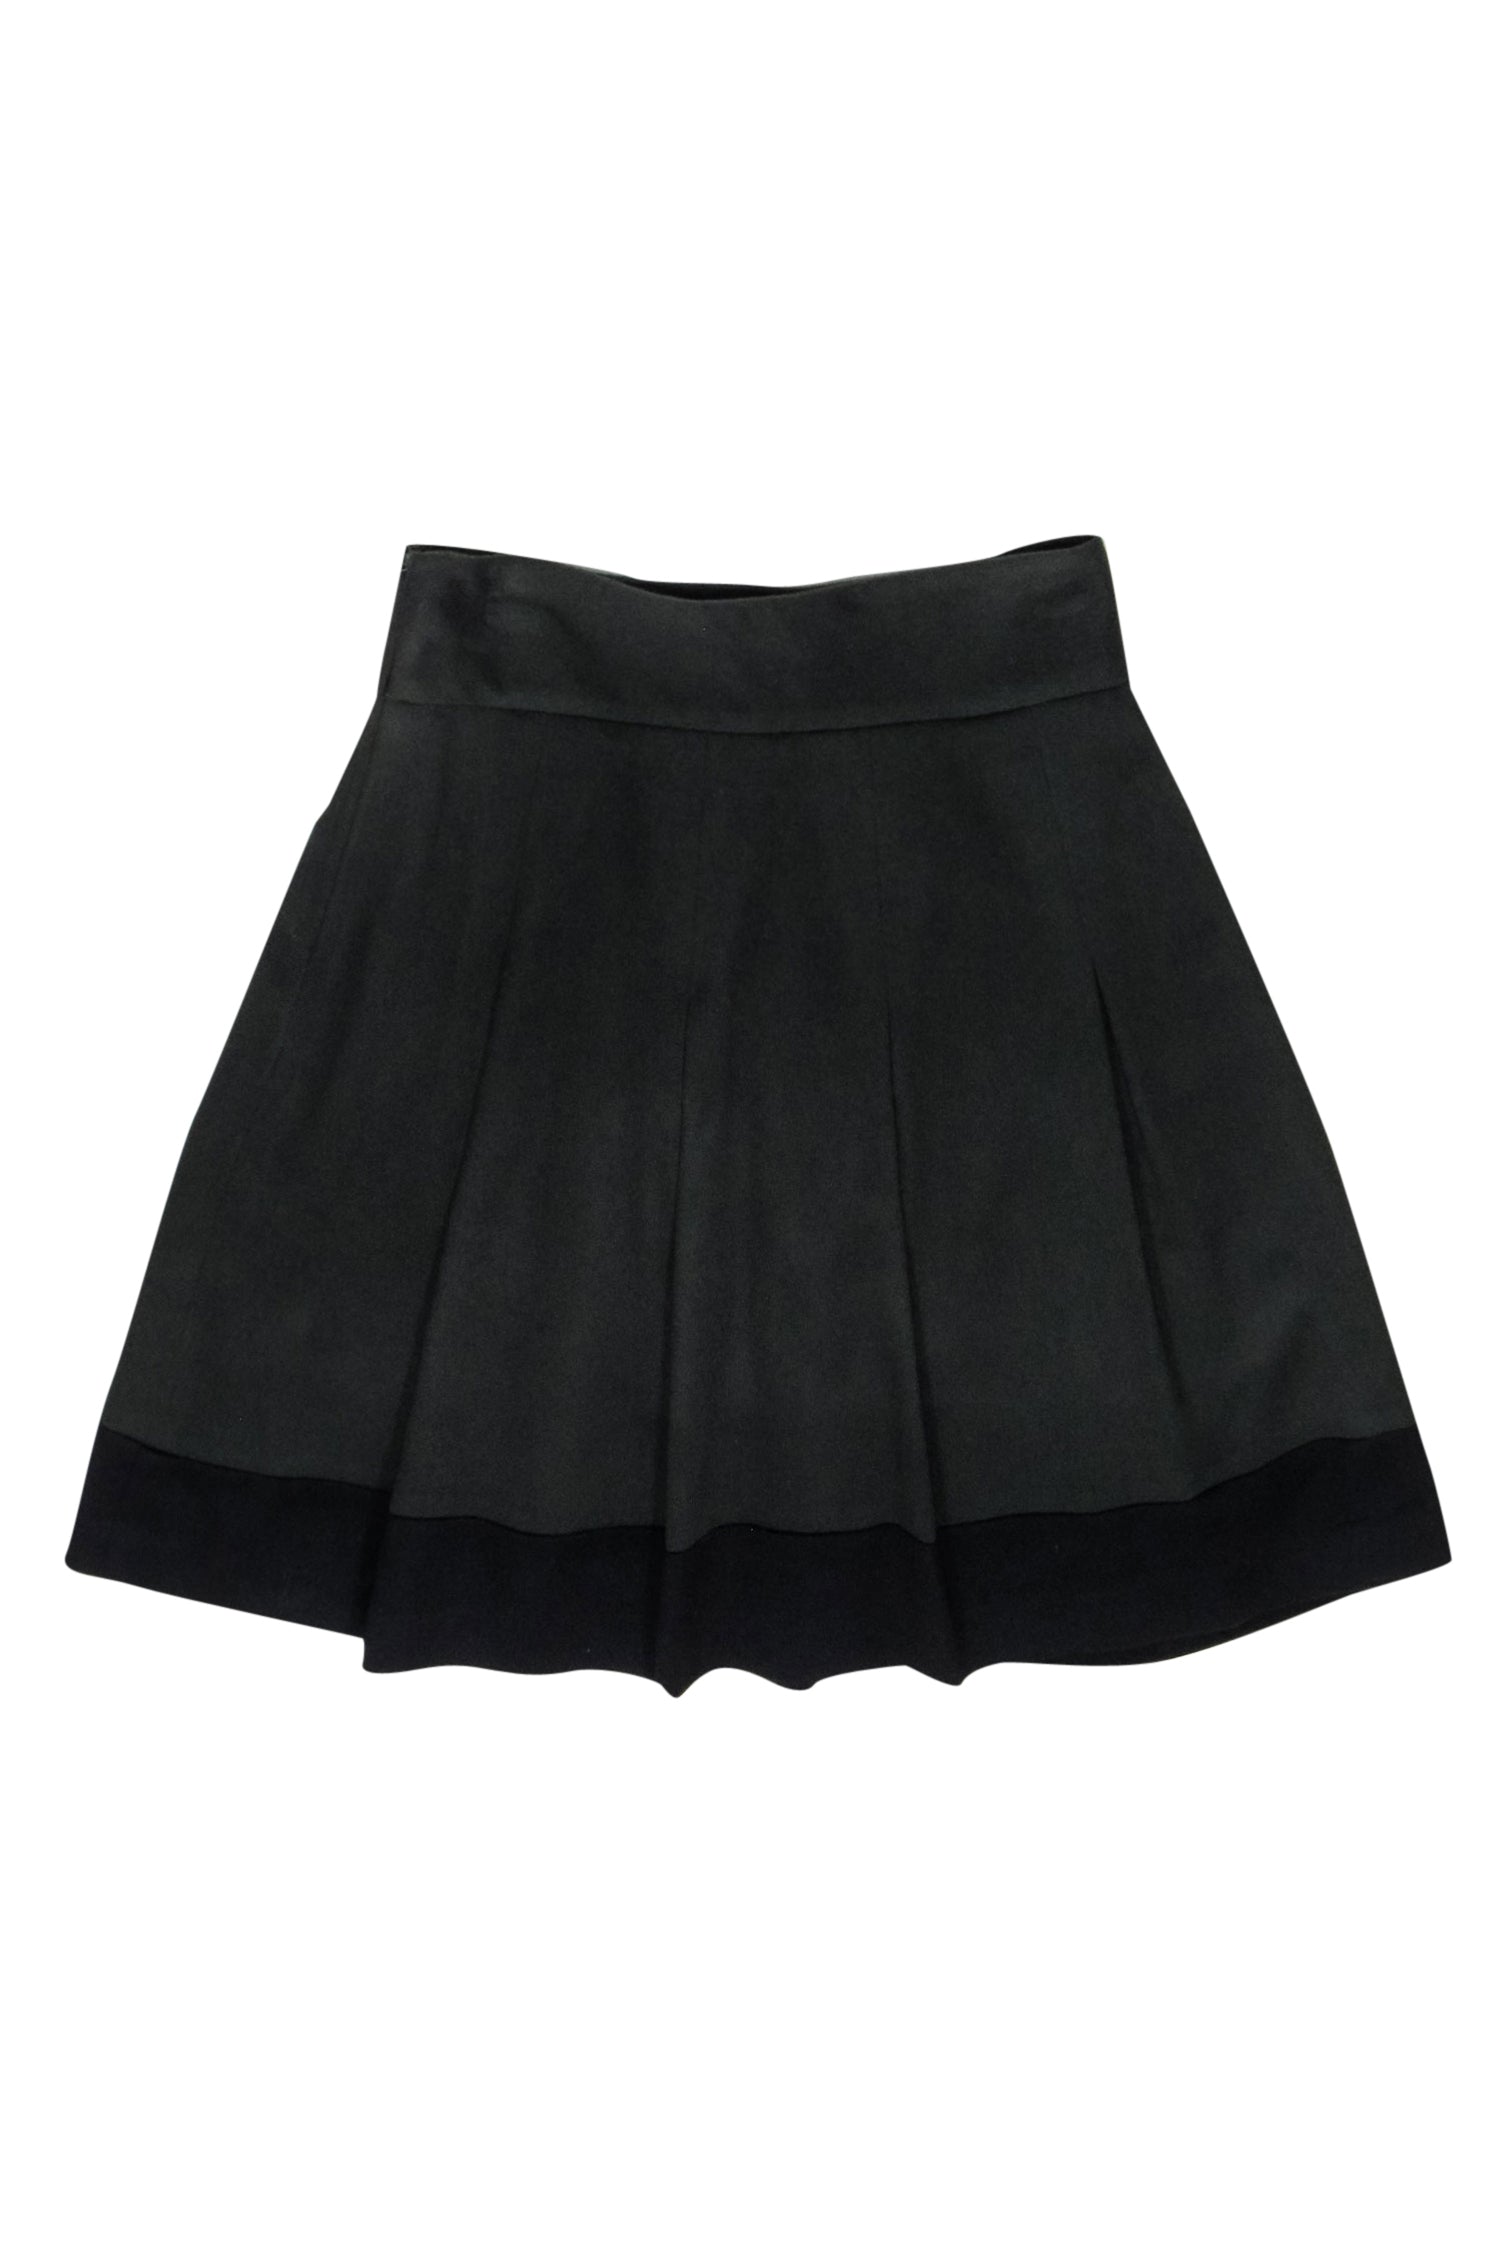 Rag & Bone - Olive & Black Cashmere Pleated A-Line Skirt Sz 6